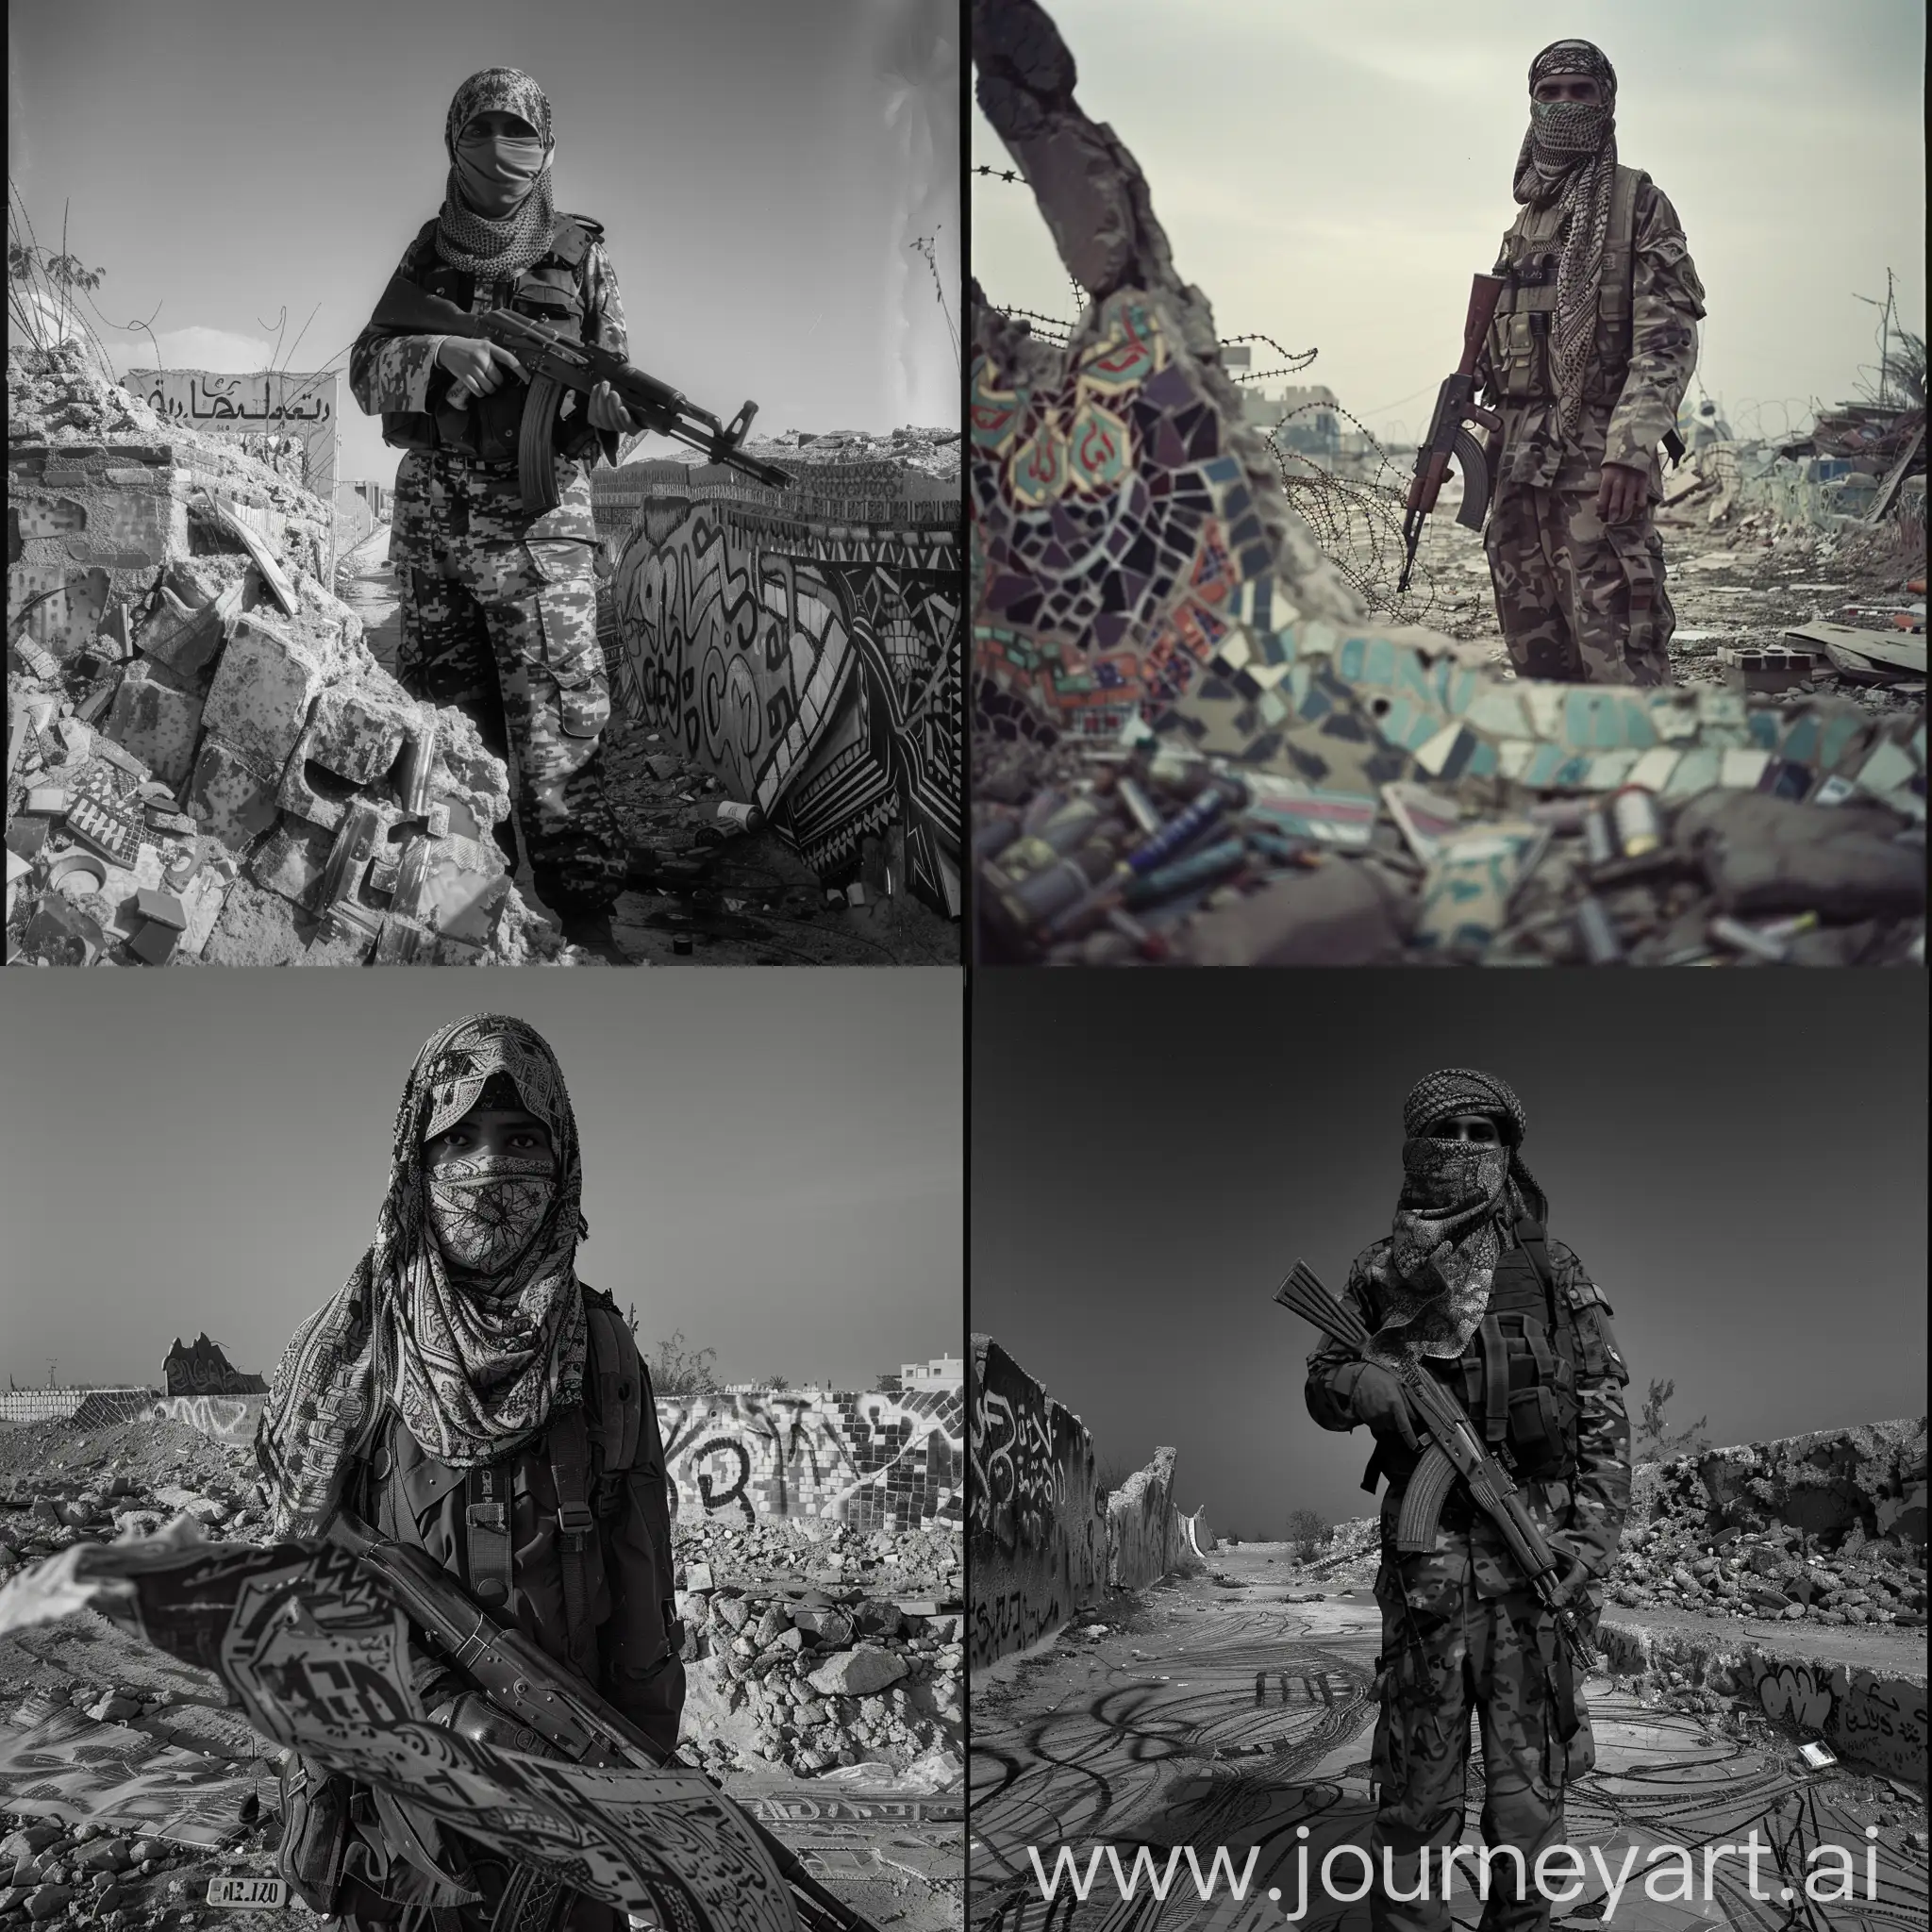 Confident-Guerrilla-Soldier-in-Urban-Warfare-Gritty-DocumentaryStyle-Photograph